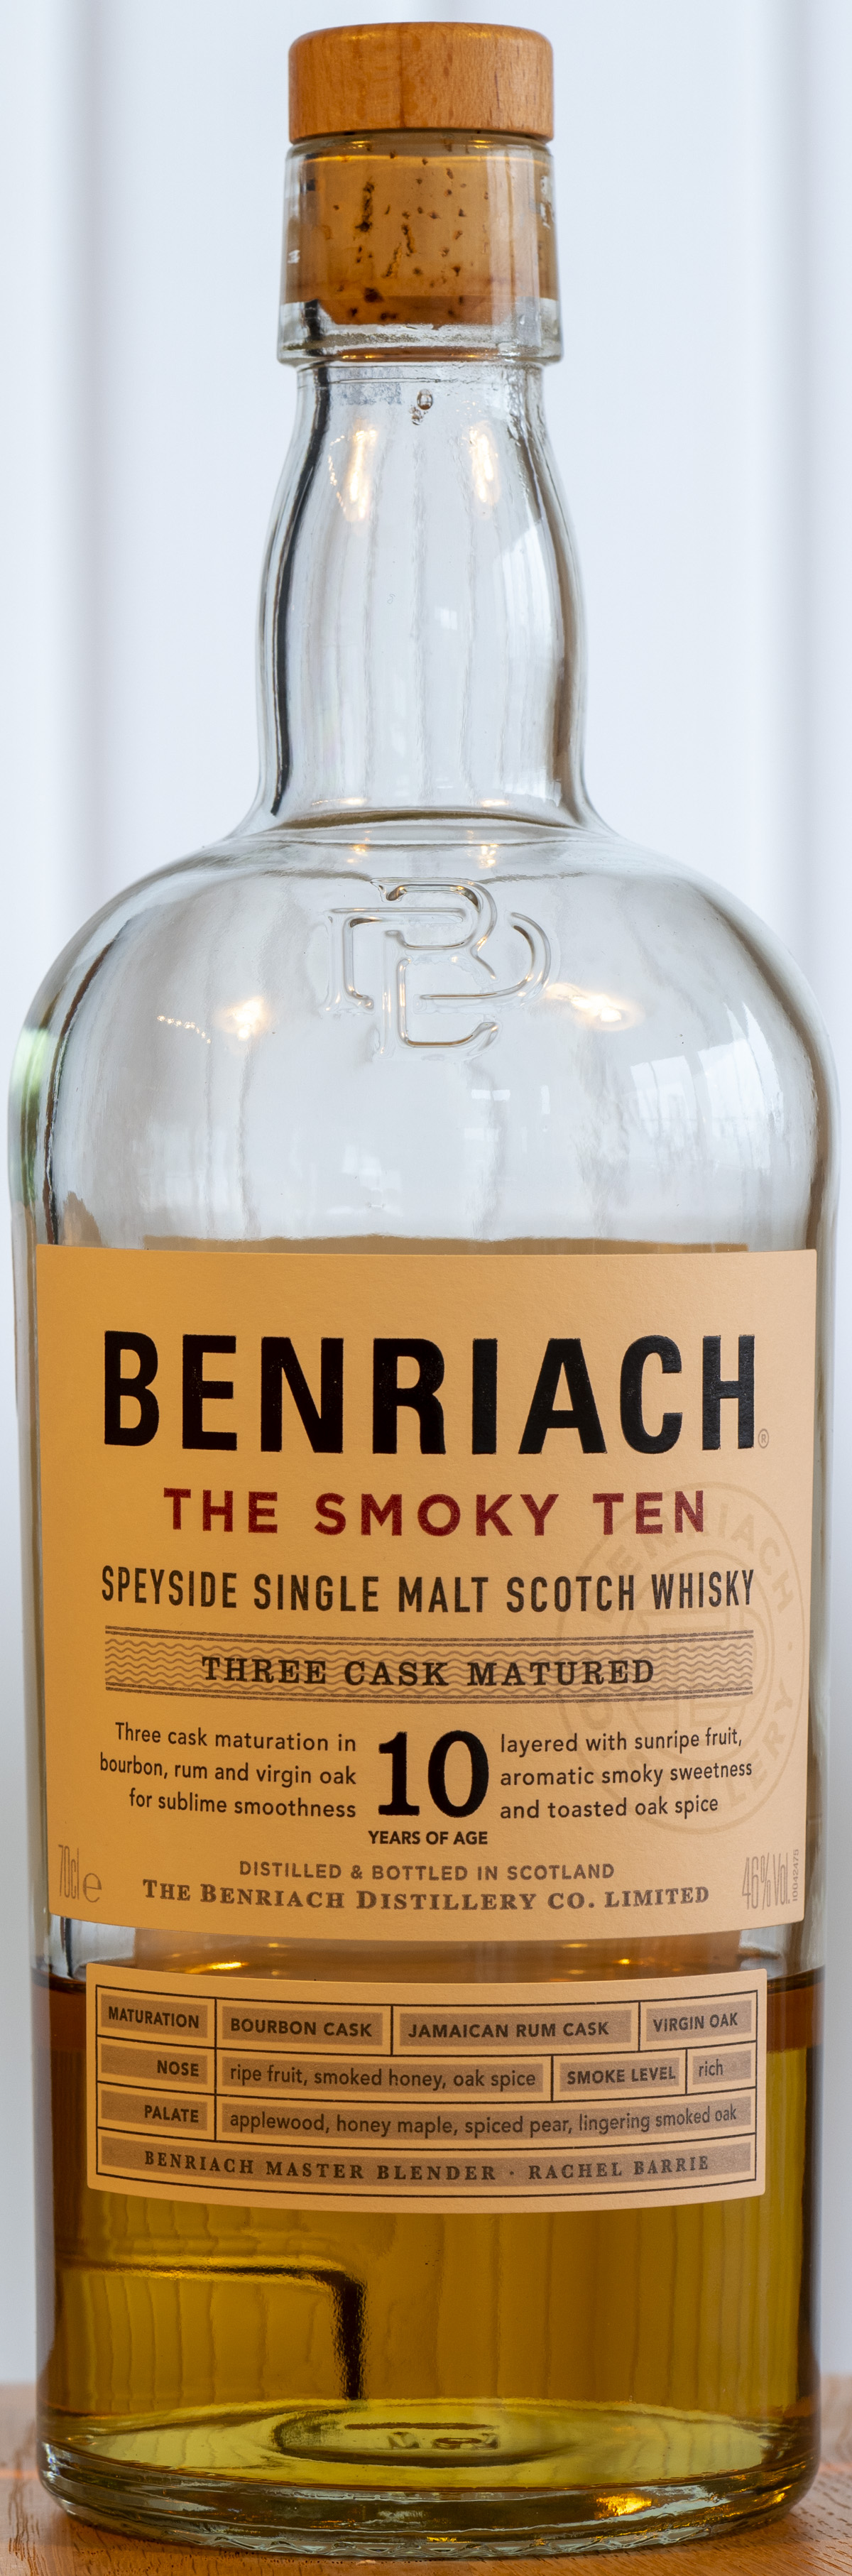 Billede: PHC_3901- Benriach The Smoky Ten - bottle front.jpg